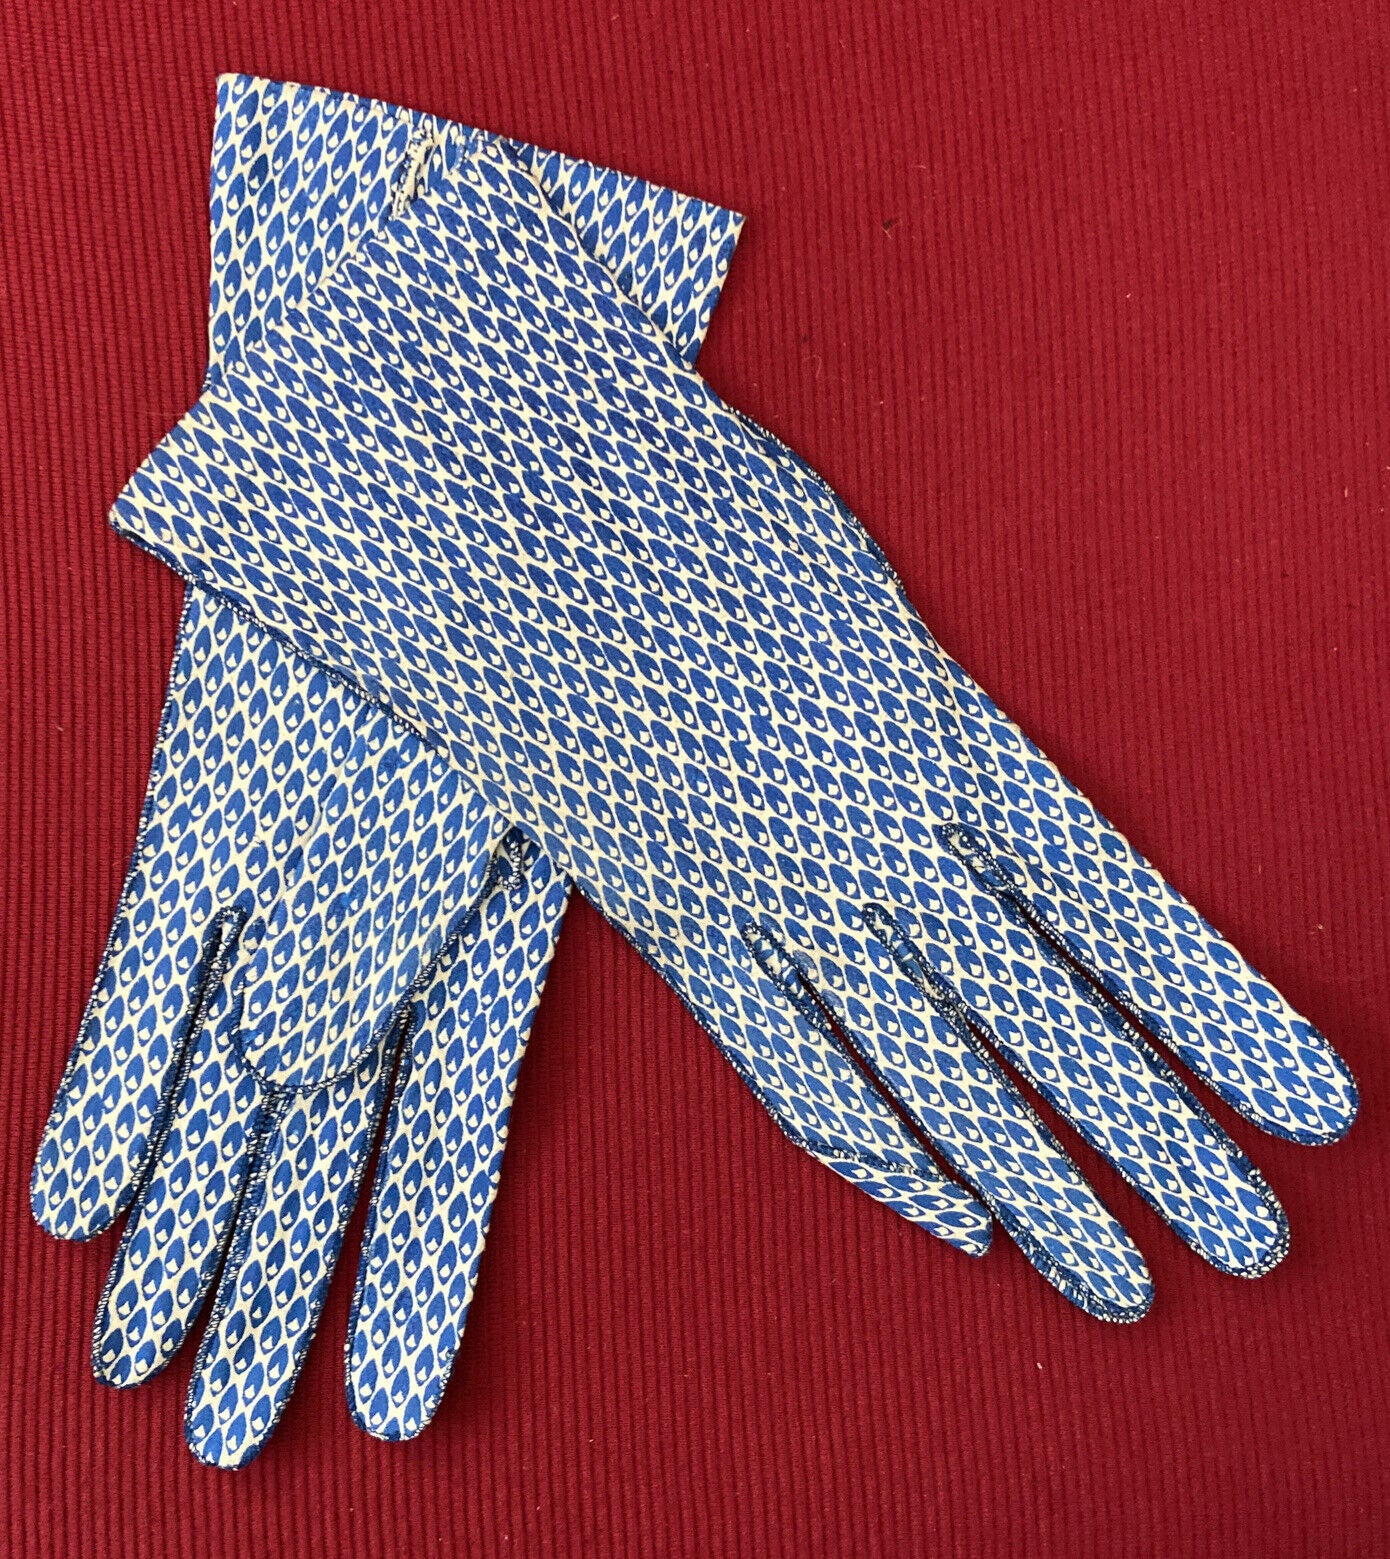 Vintage Trussardi gloves